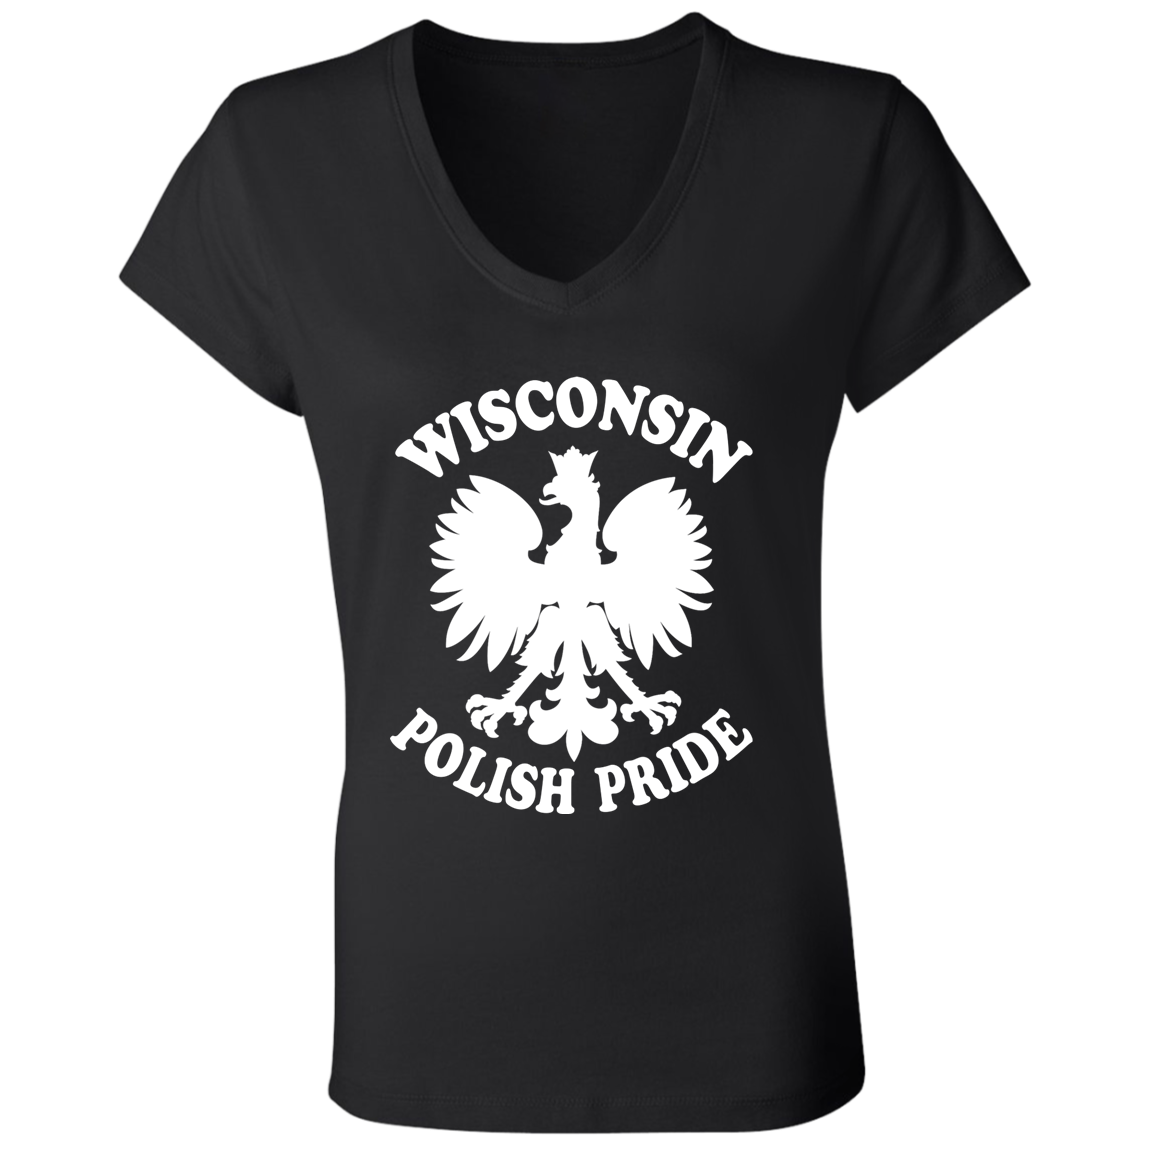 Wisconsin Polish Pride Apparel CustomCat B6005 Ladies' Jersey V-Neck T-Shirt Black S